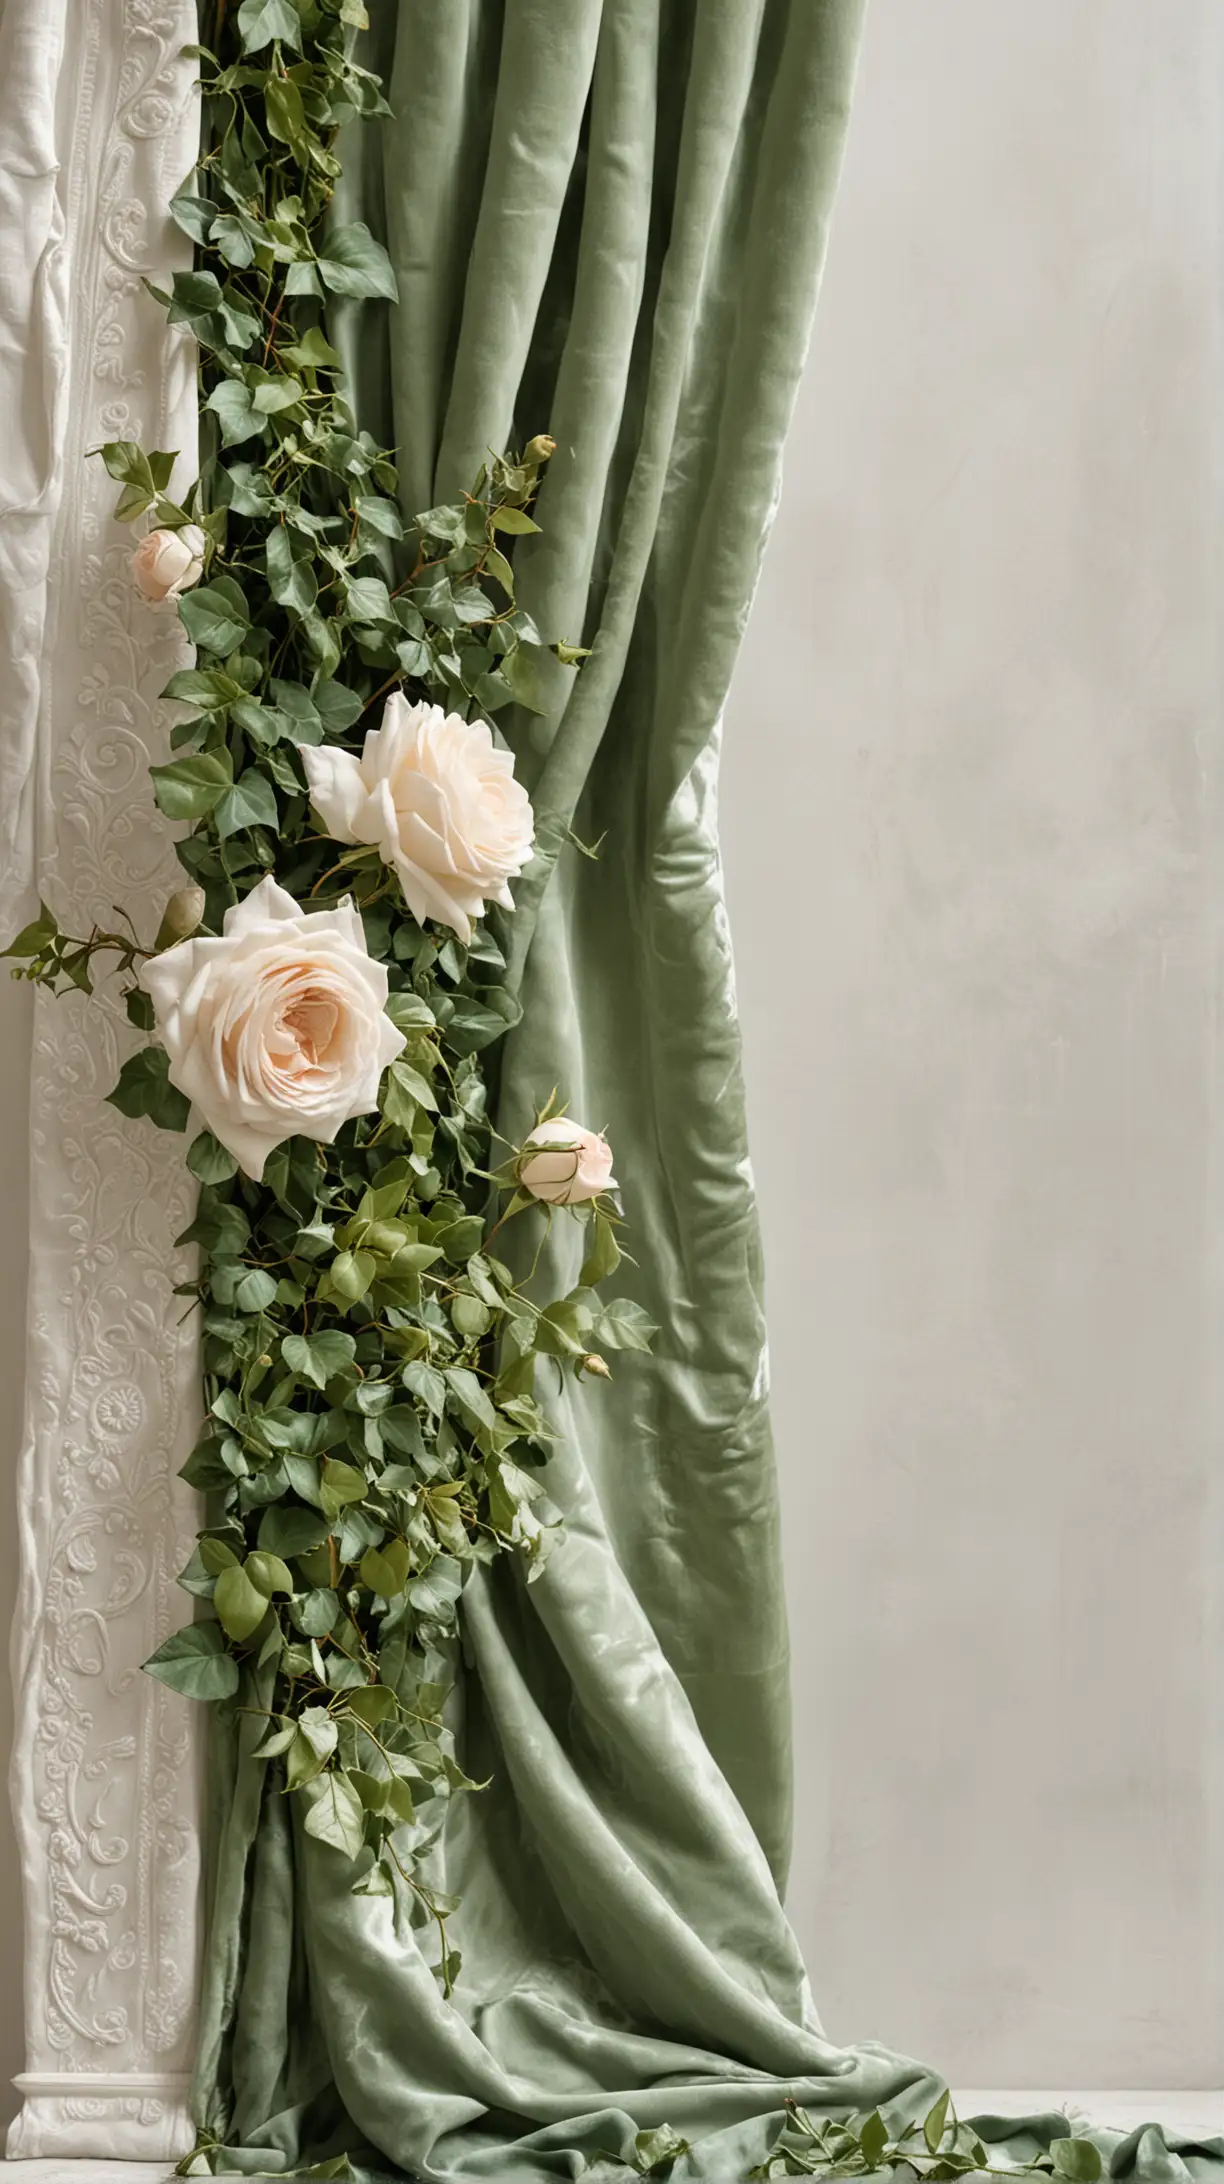 Roses and Ivy on Draped Green Fabric against White Velvet Background